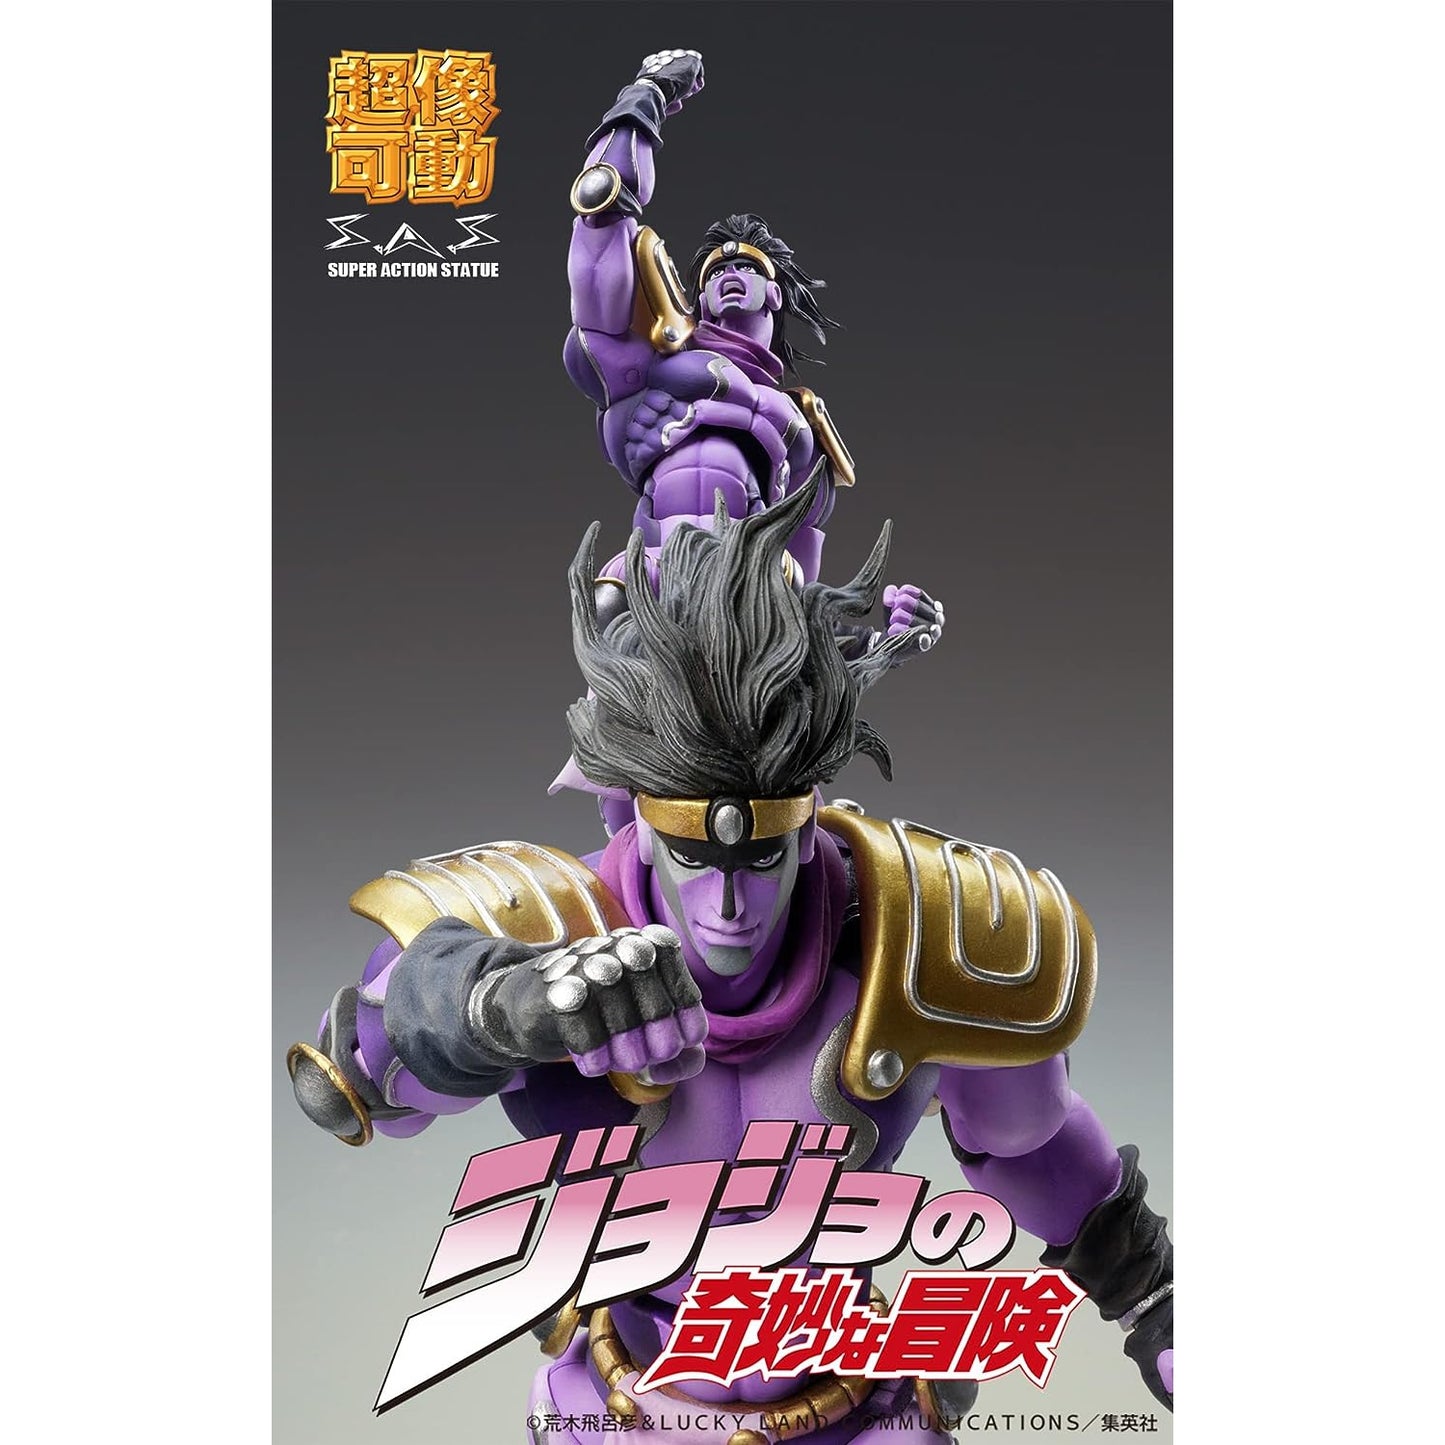 JoJo's Bizarre Adventure Super Action Statue Figure 3ª parte Jotaro Kujo Ver.1.5 & Star Platinum Terceiro S.A.S Japão NOVO